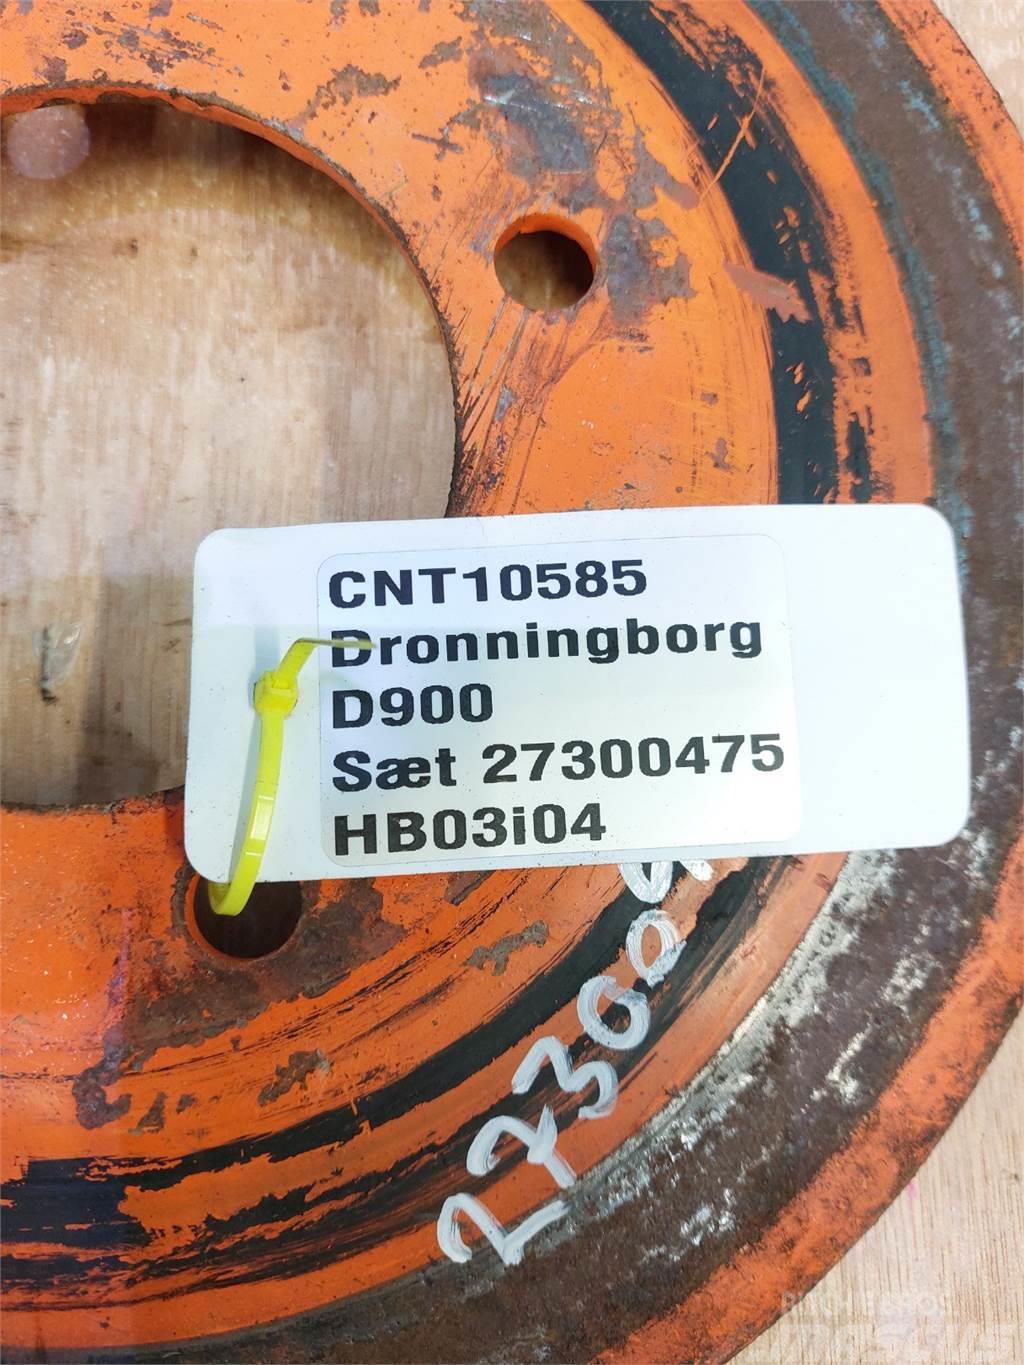 Dronningborg D900 Další